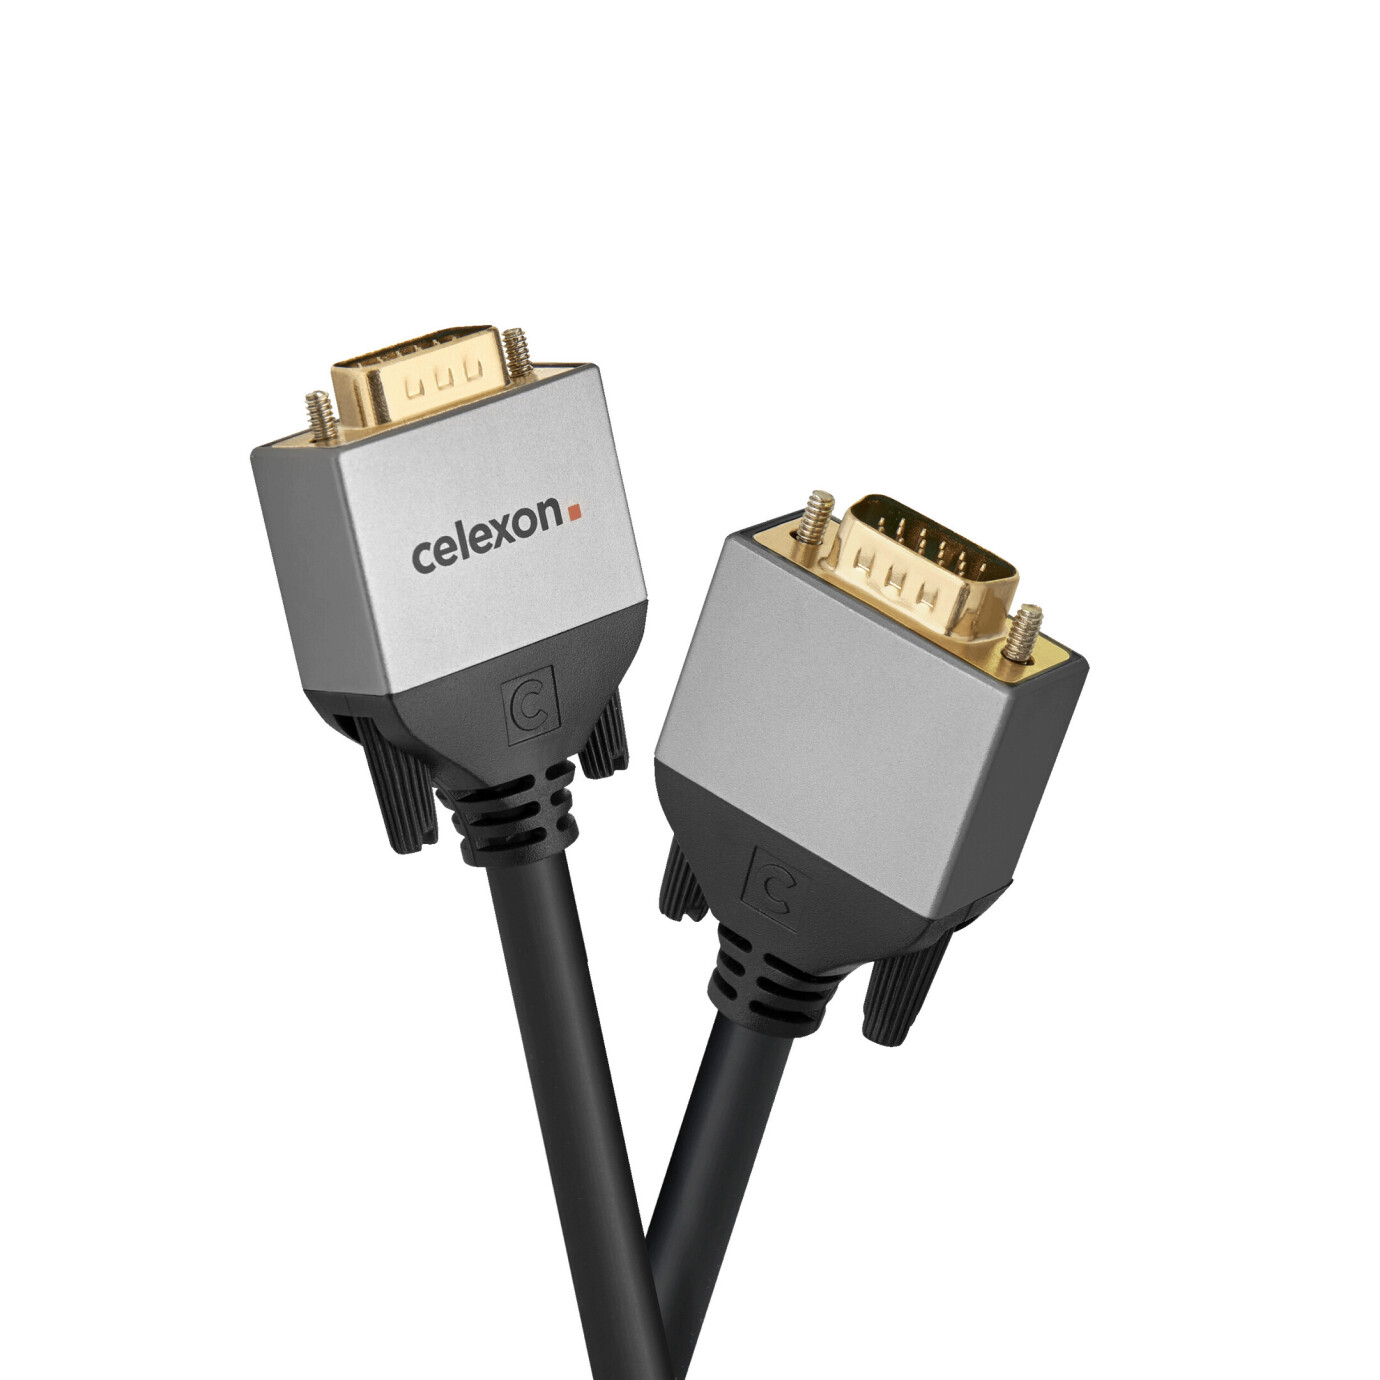 celexon VGA Kabel 1,5m - Professional Line